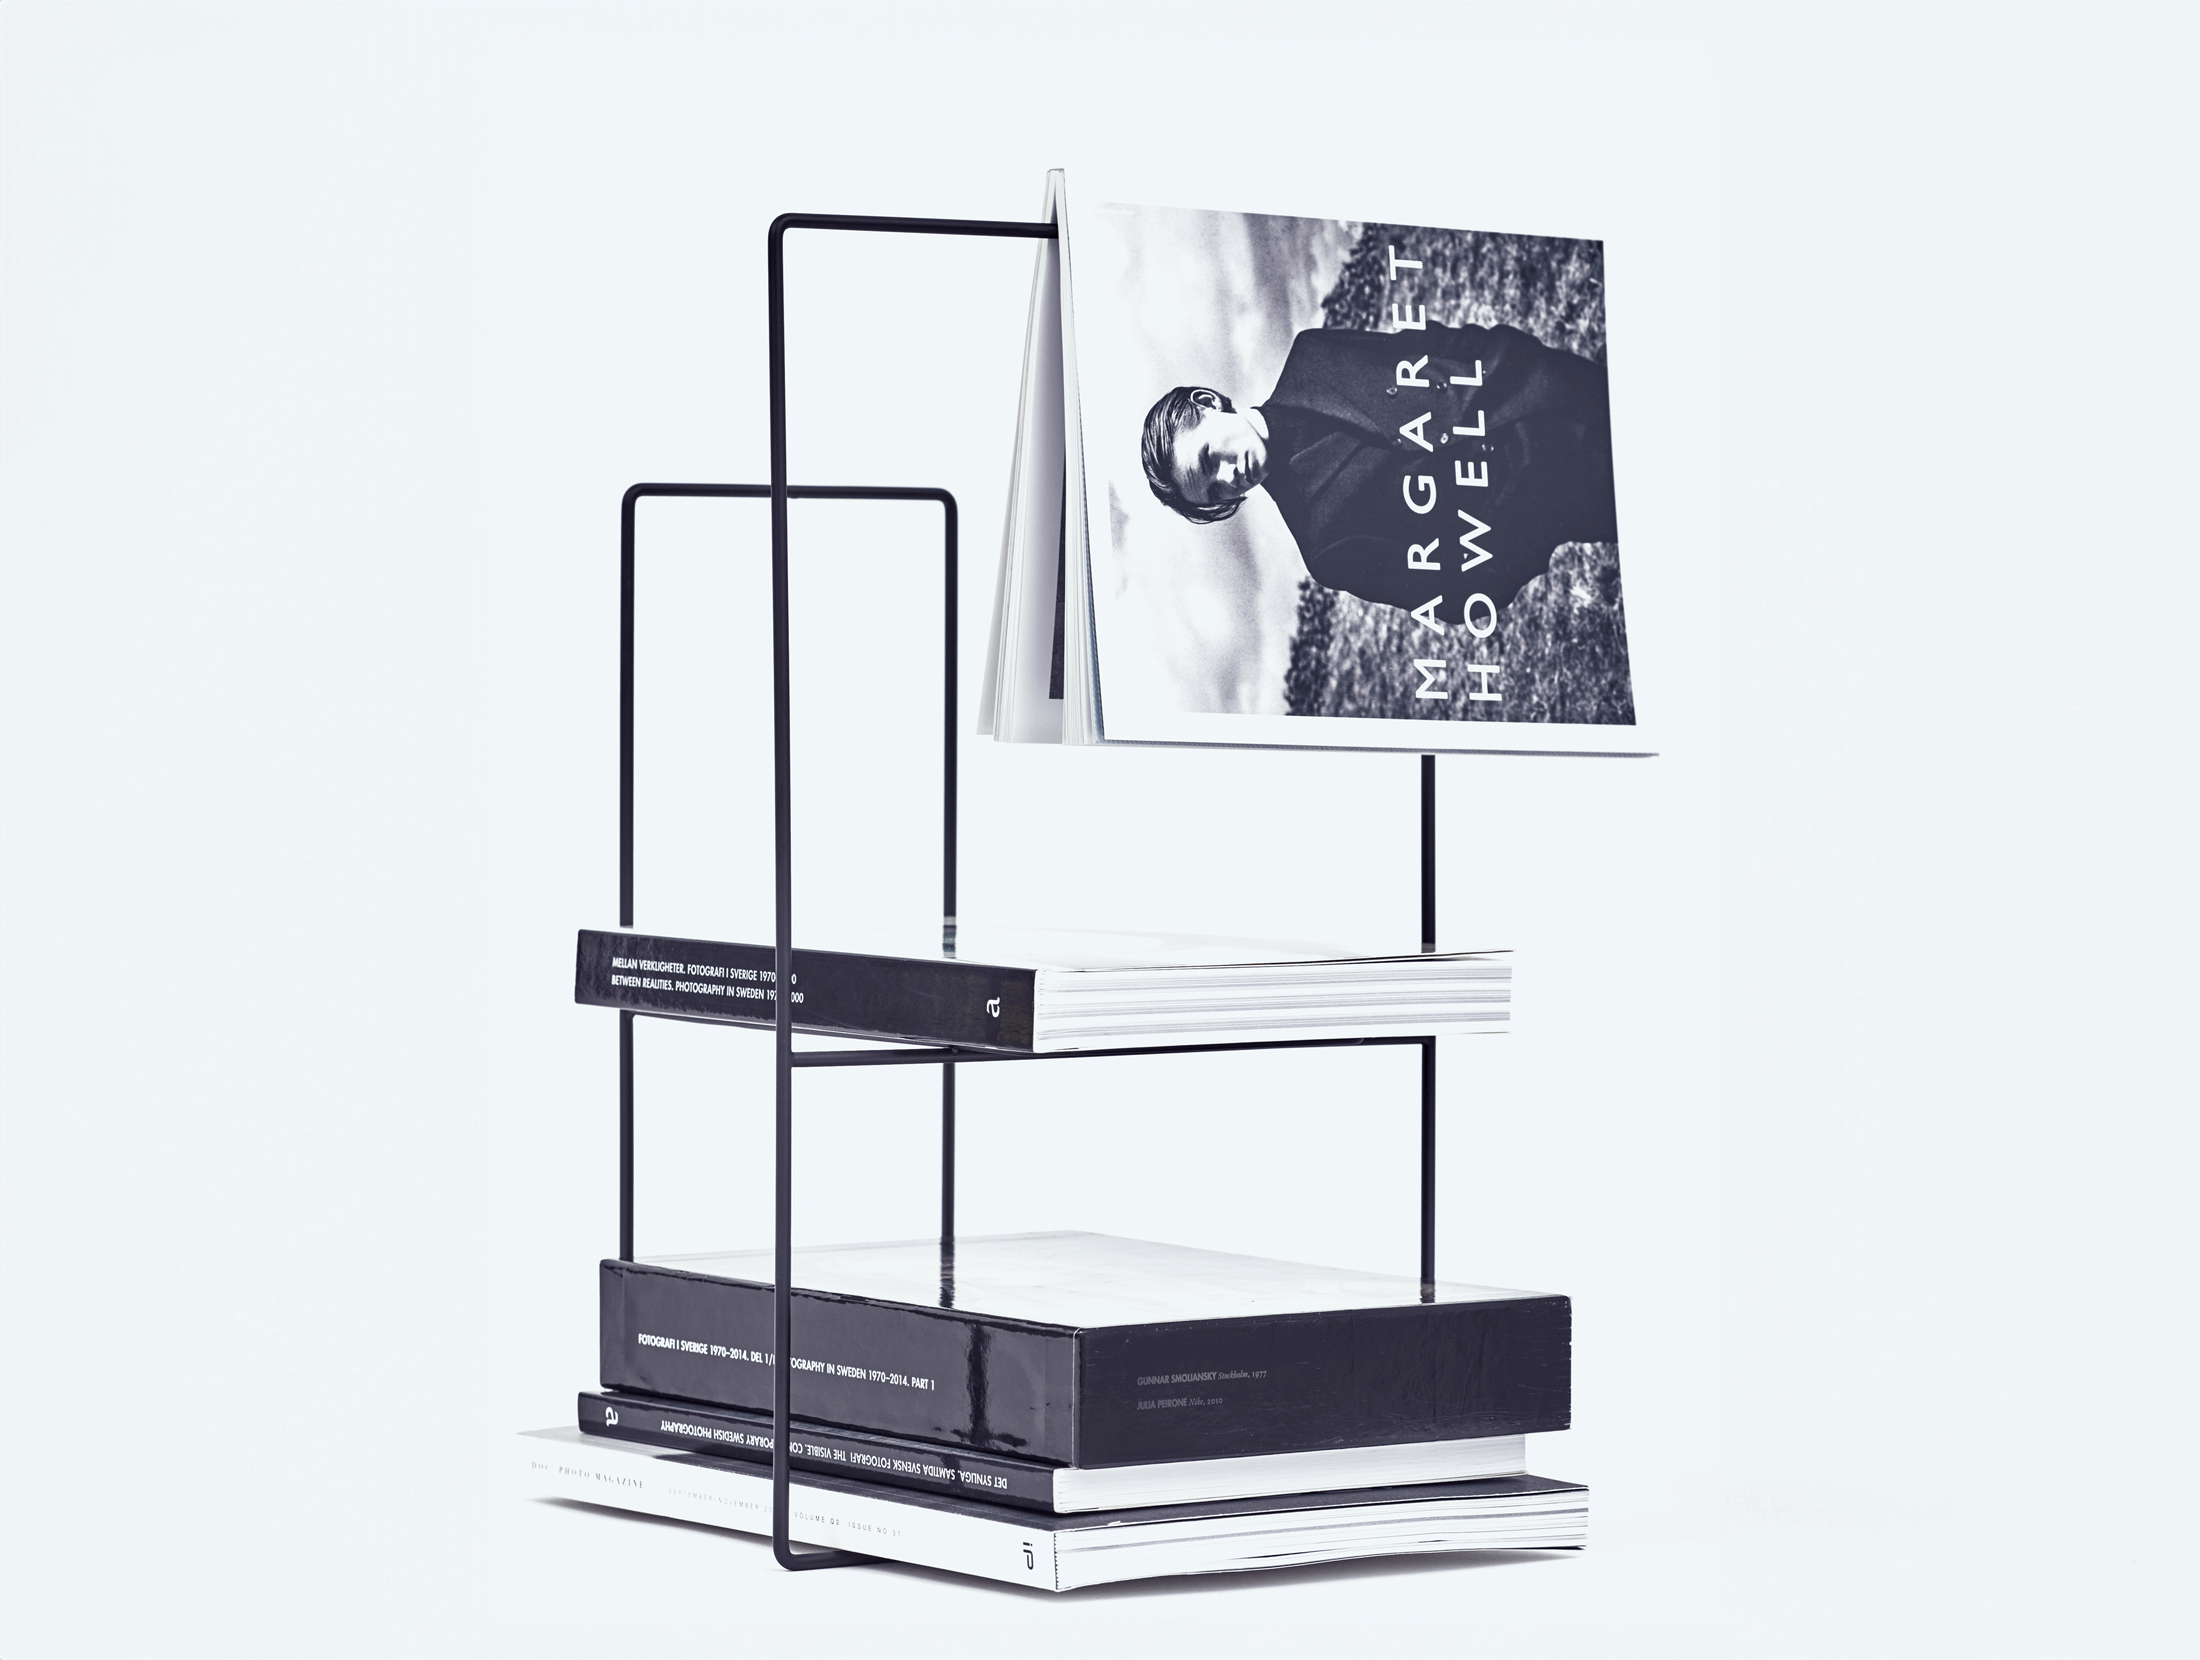 Rewire Magazine newspaper storage rack, tre product, medium black